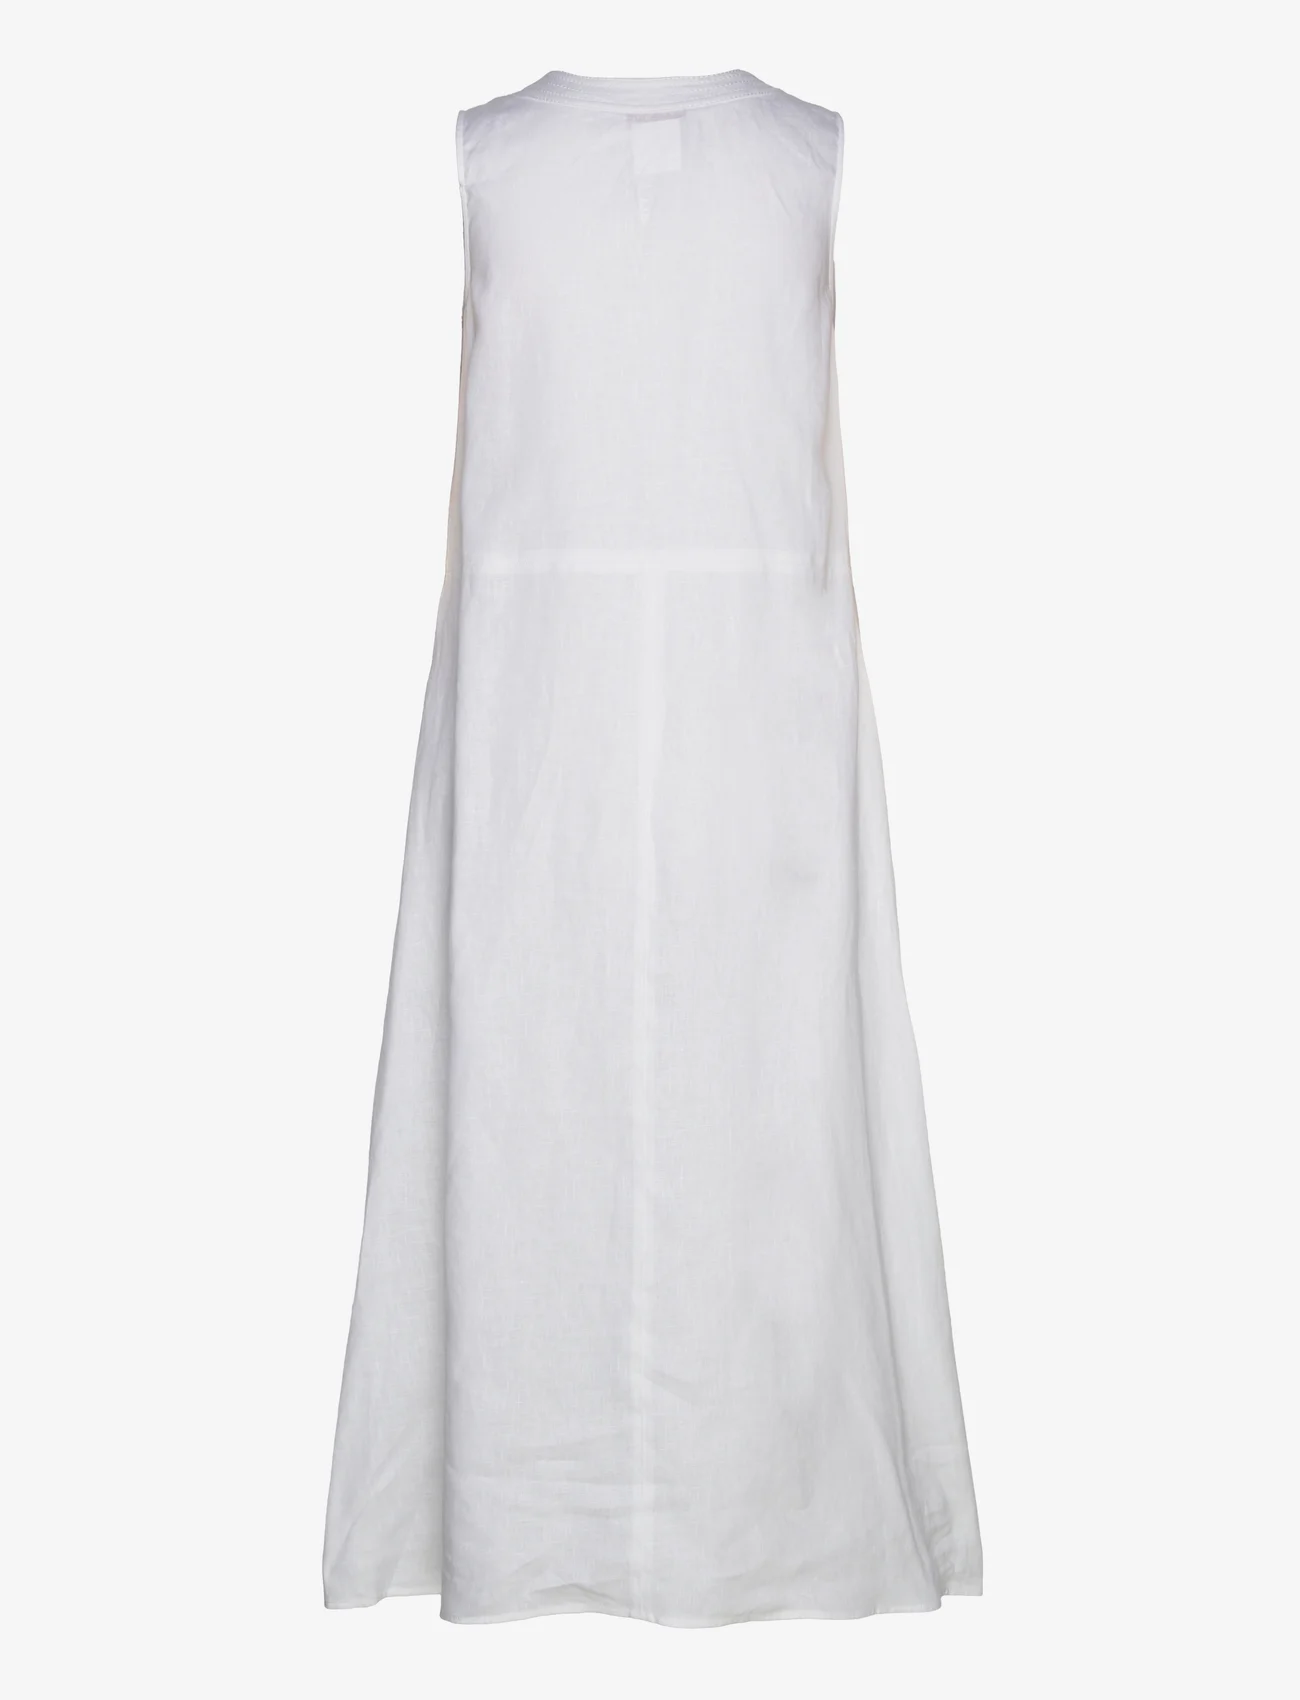 Max Mara Leisure - SOFOCLE - shirt dresses - optical white - 1